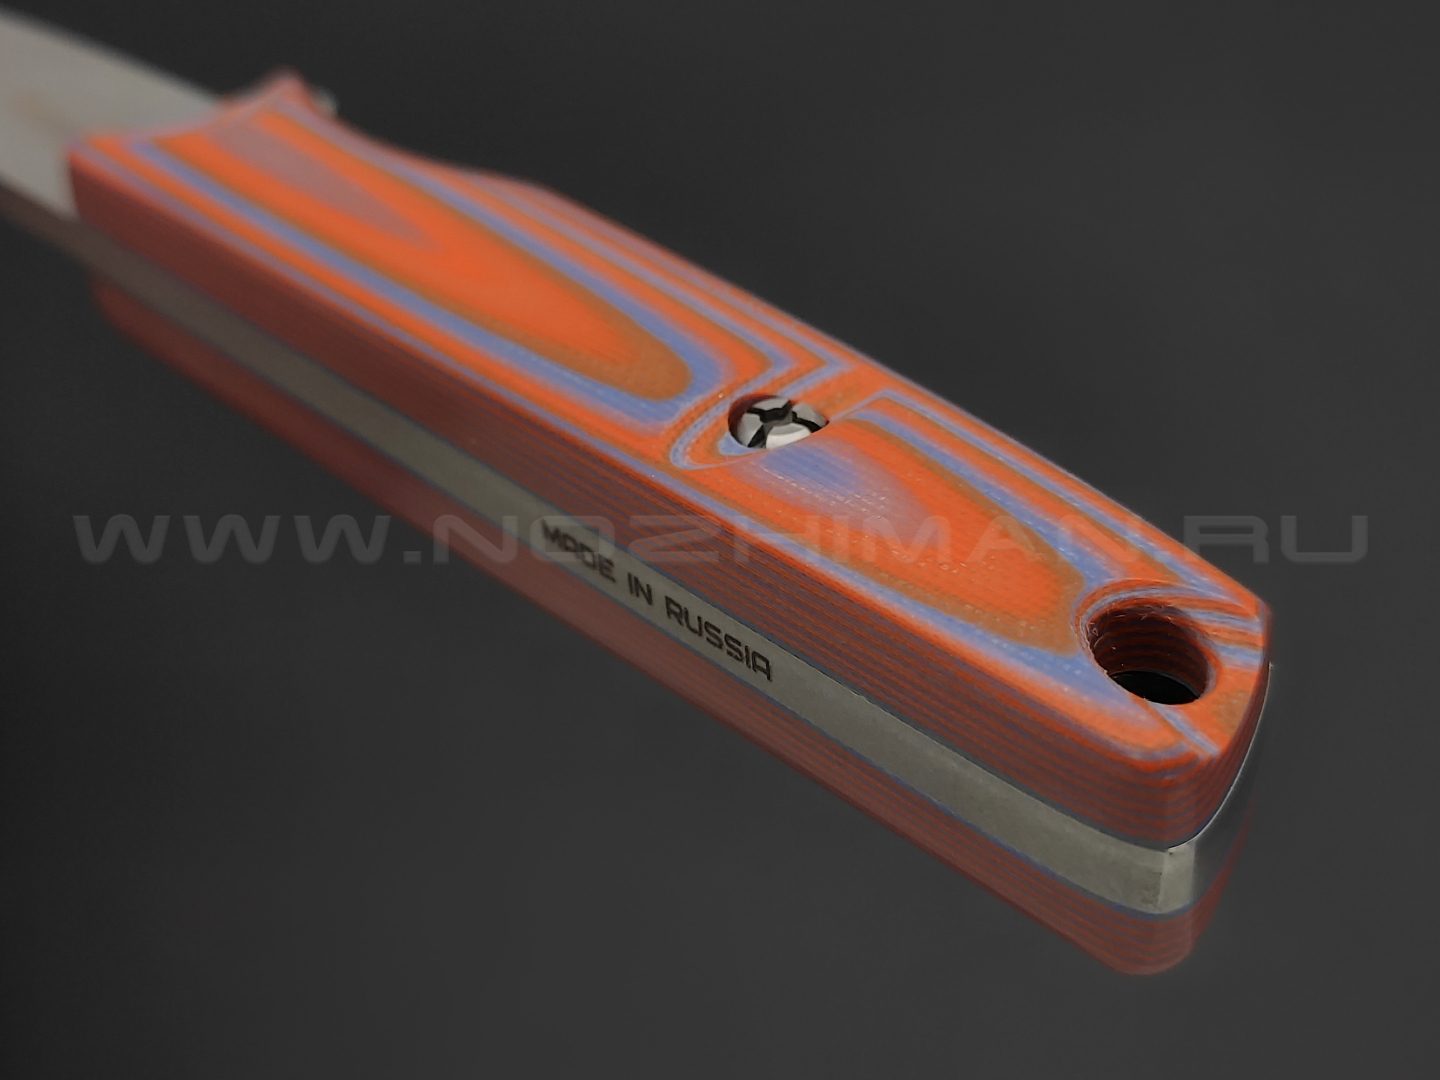 N.C.Custom нож Scar сталь X105 stonewash, рукоять G10 blue & orange